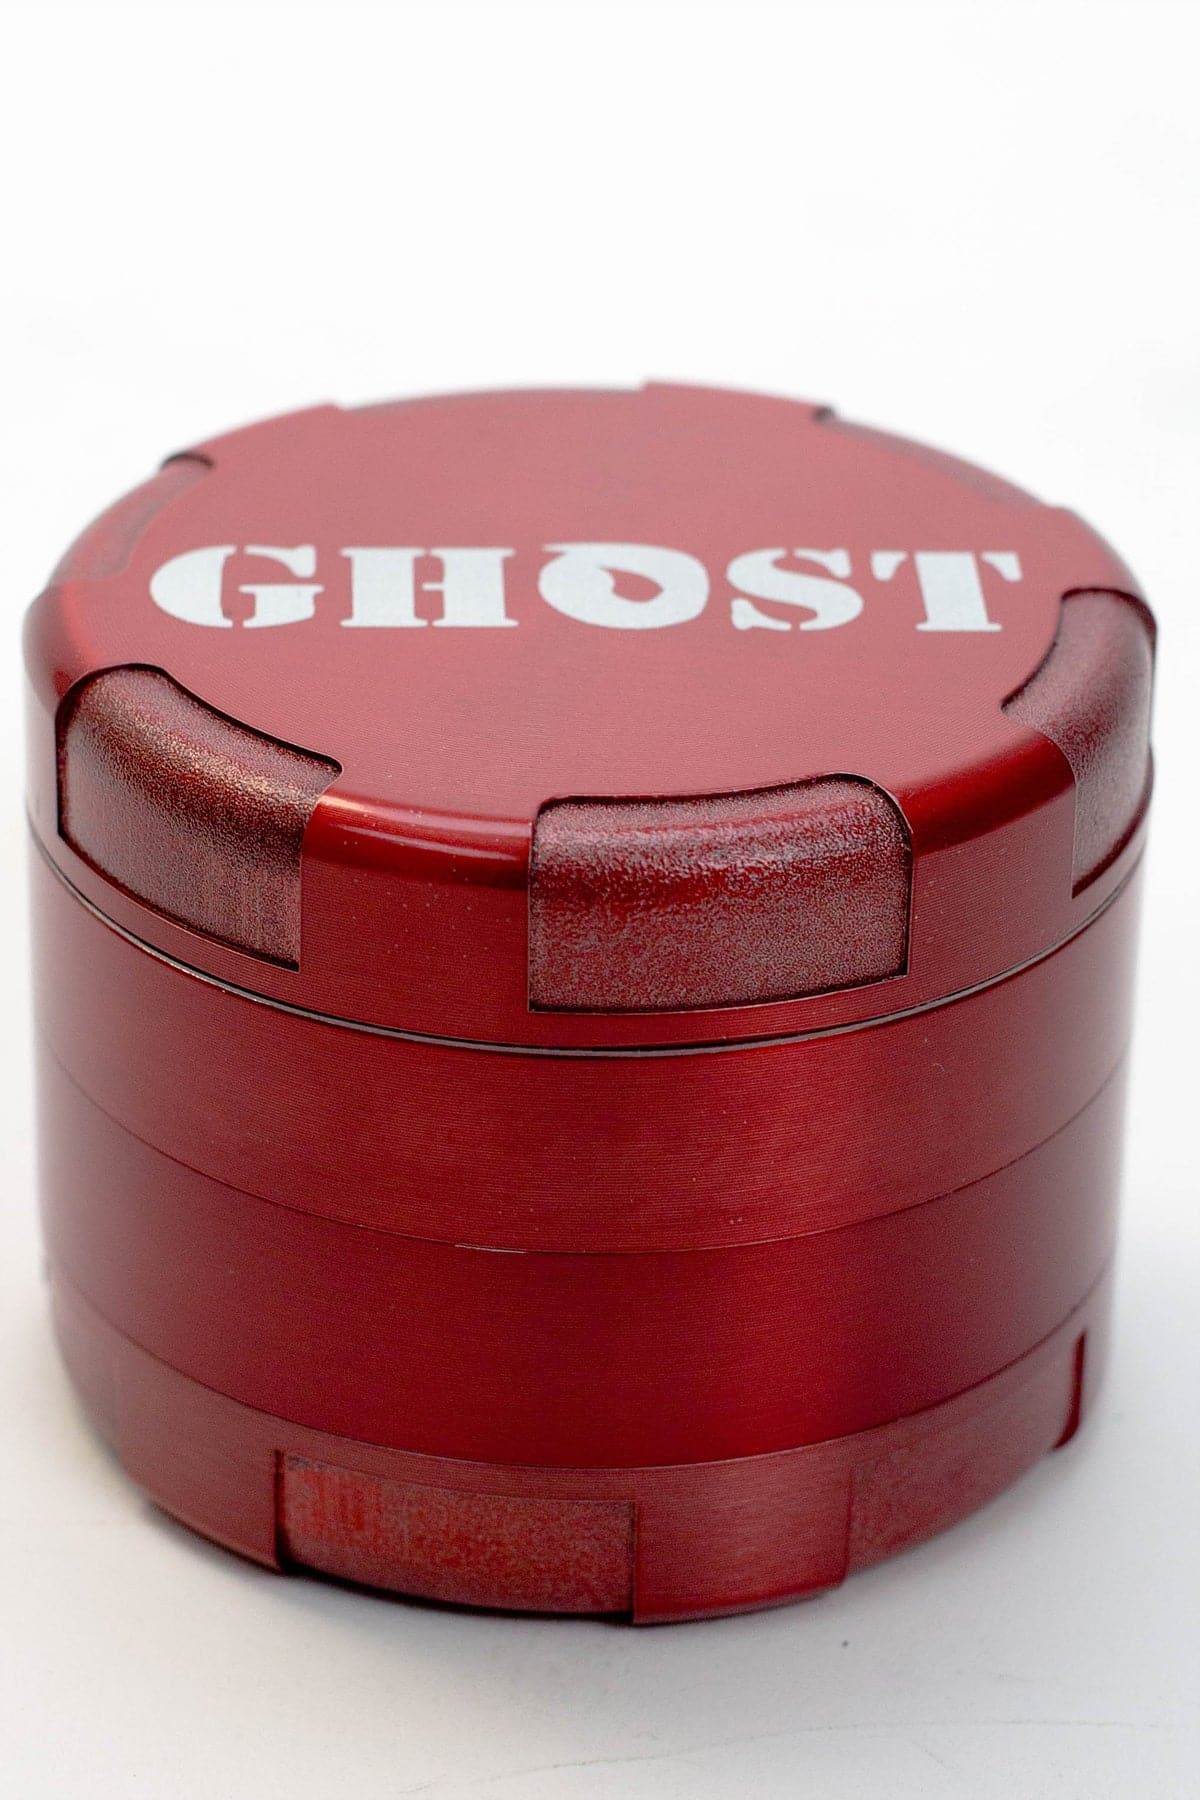 Ghost 4 Parts Large herb grinder_8